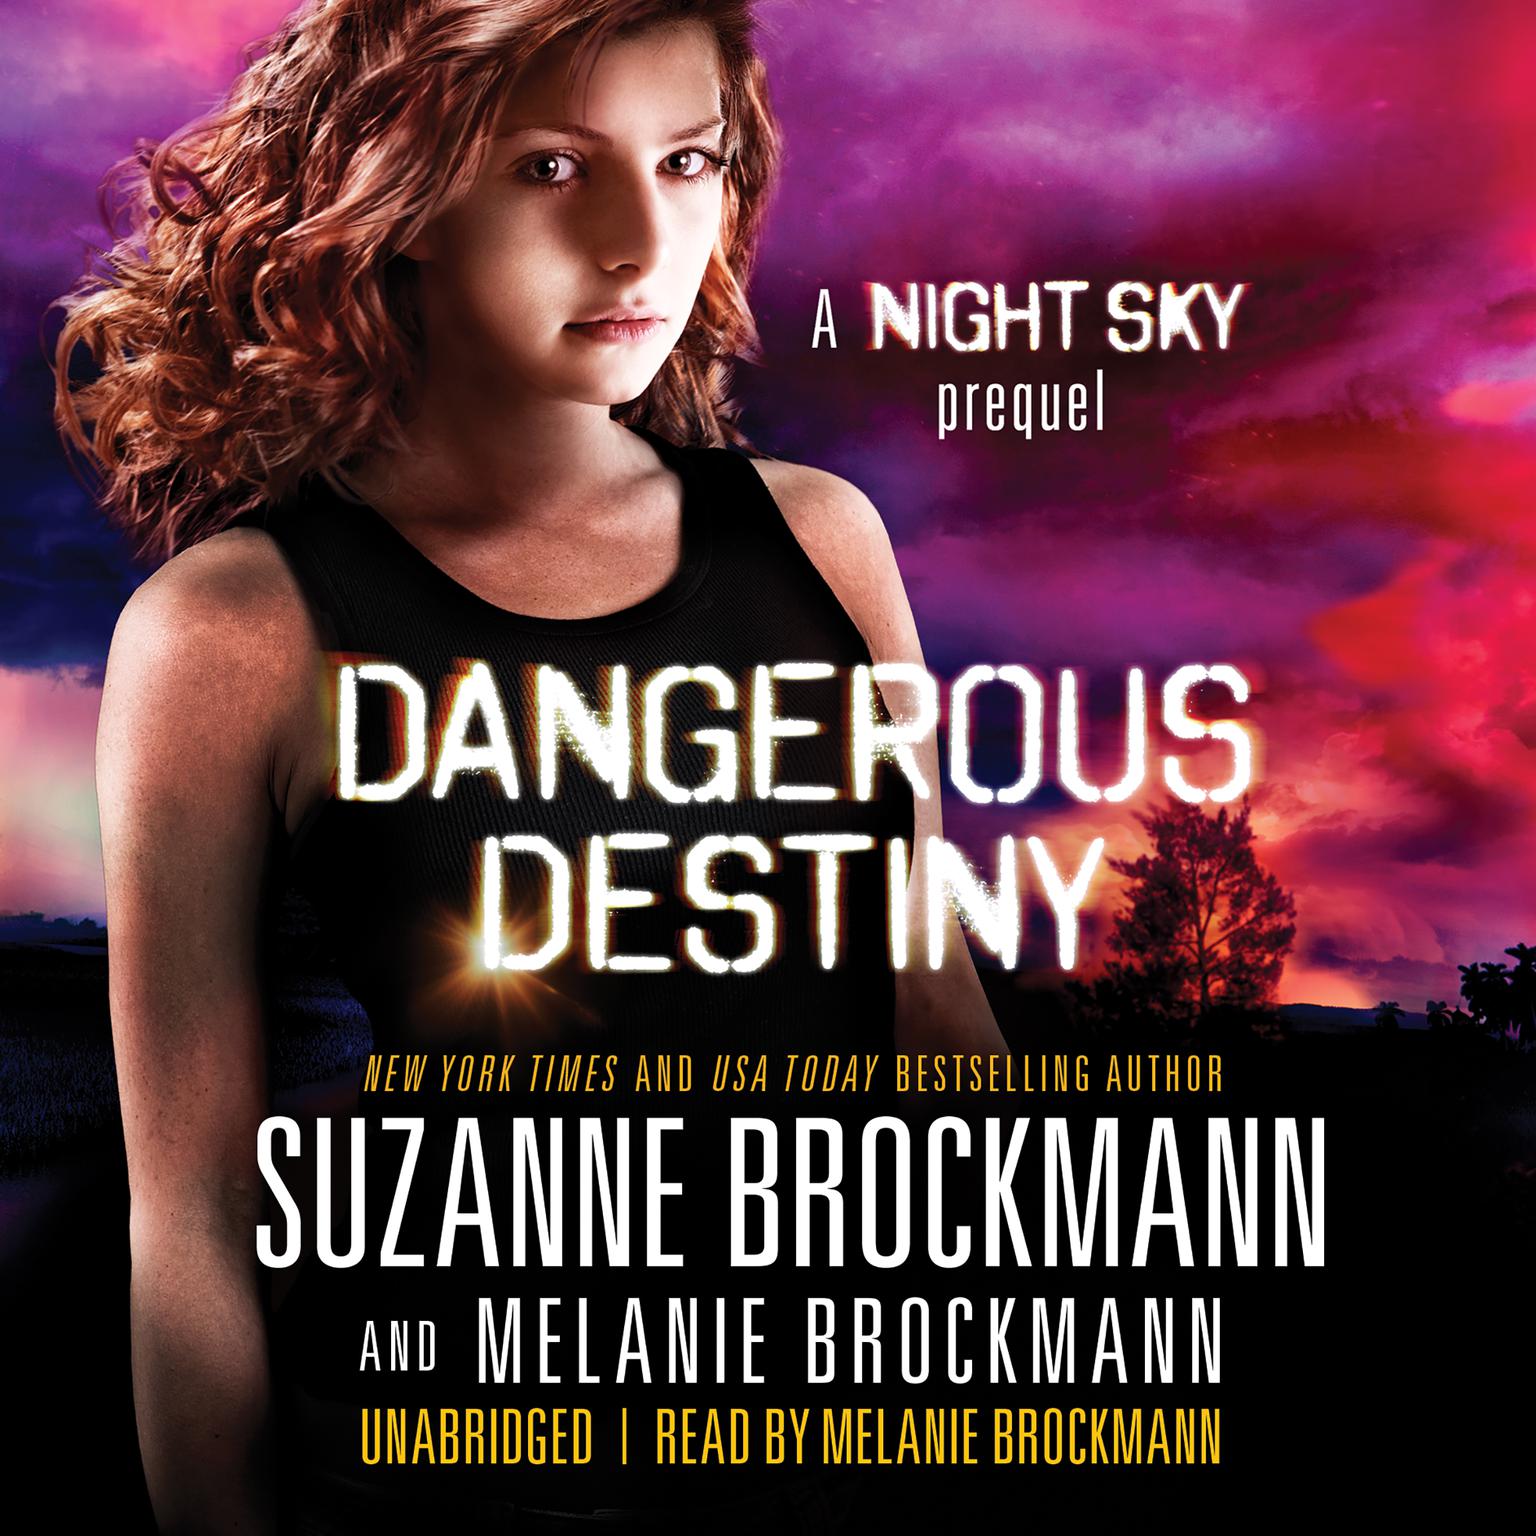 Dangerous Destiny: A Night Sky Prequel Audiobook, by Suzanne Brockmann